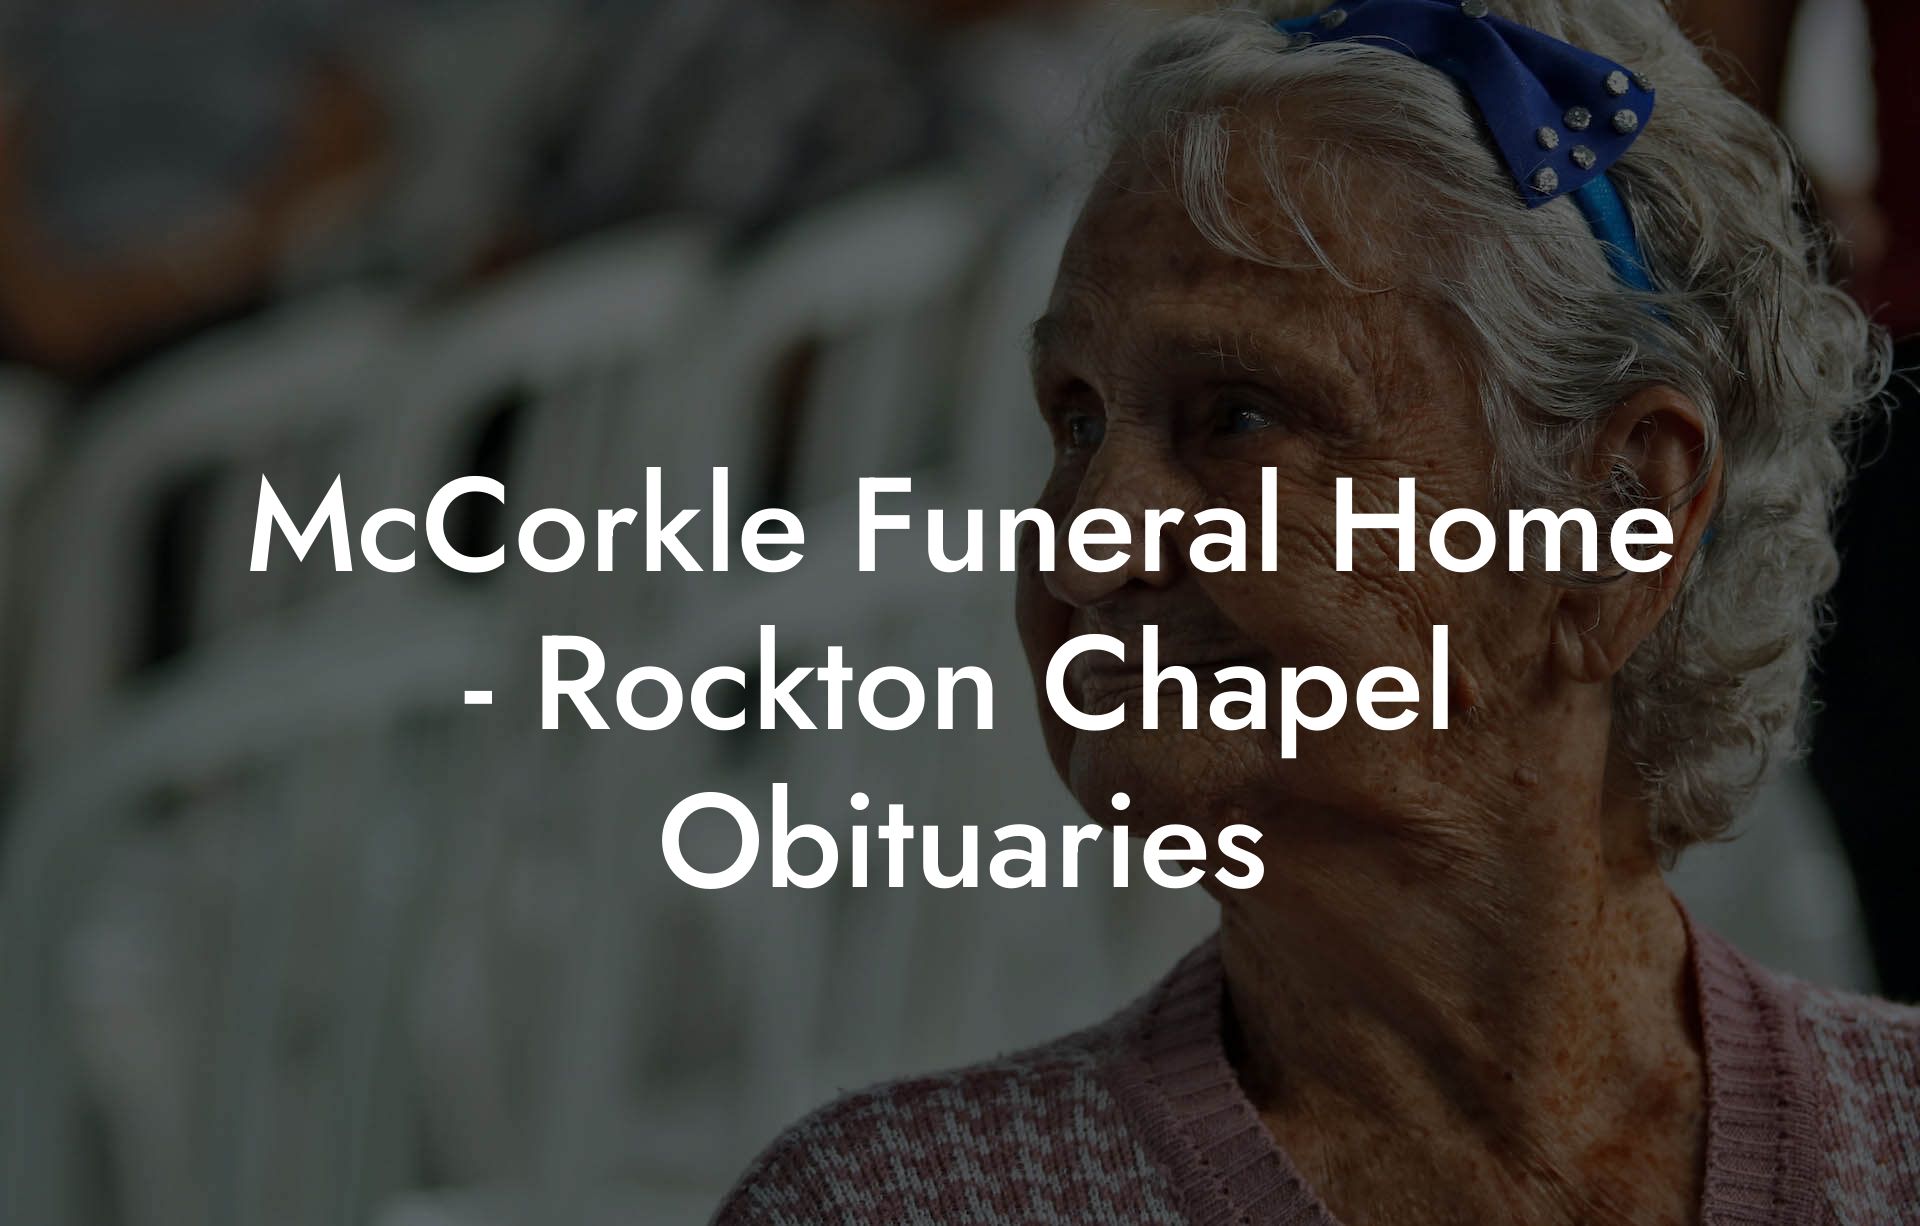 McCorkle Funeral Home - Rockton Chapel Obituaries